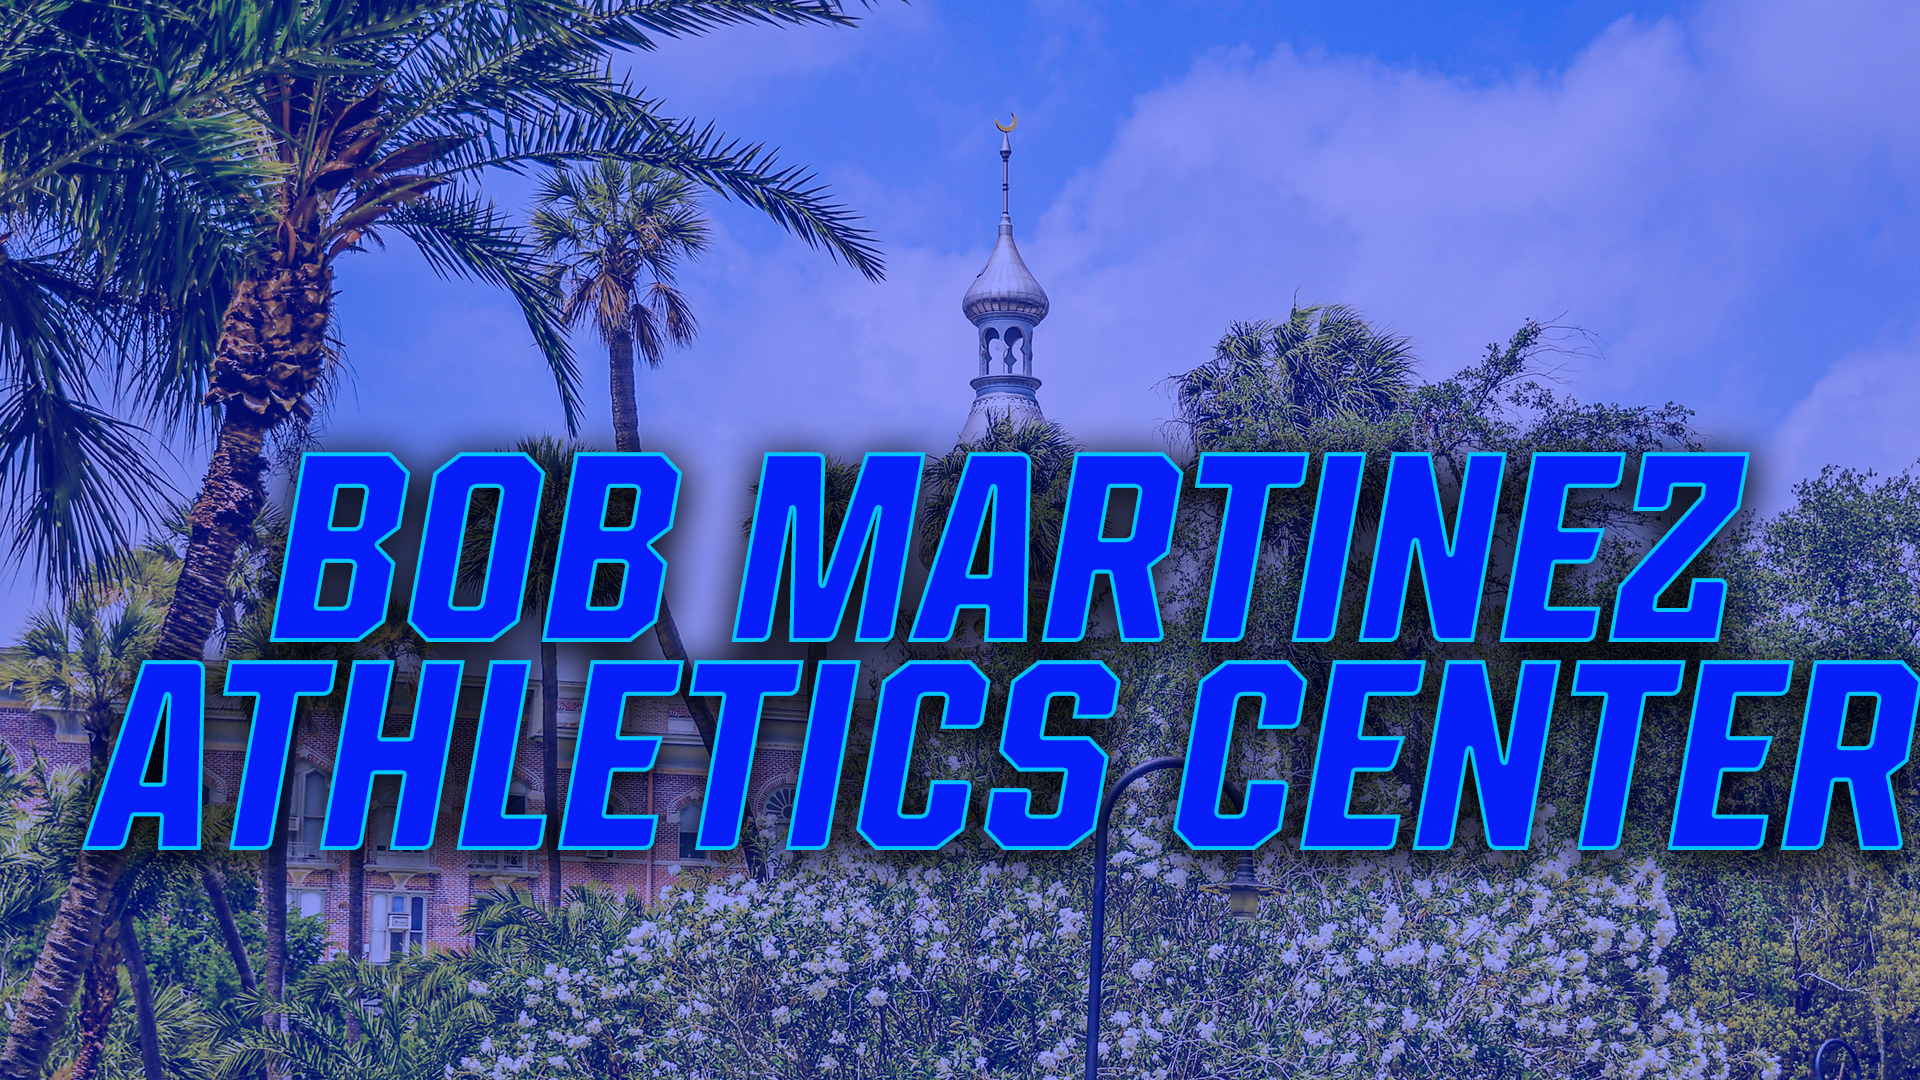 Bob Martinez Athletics Center